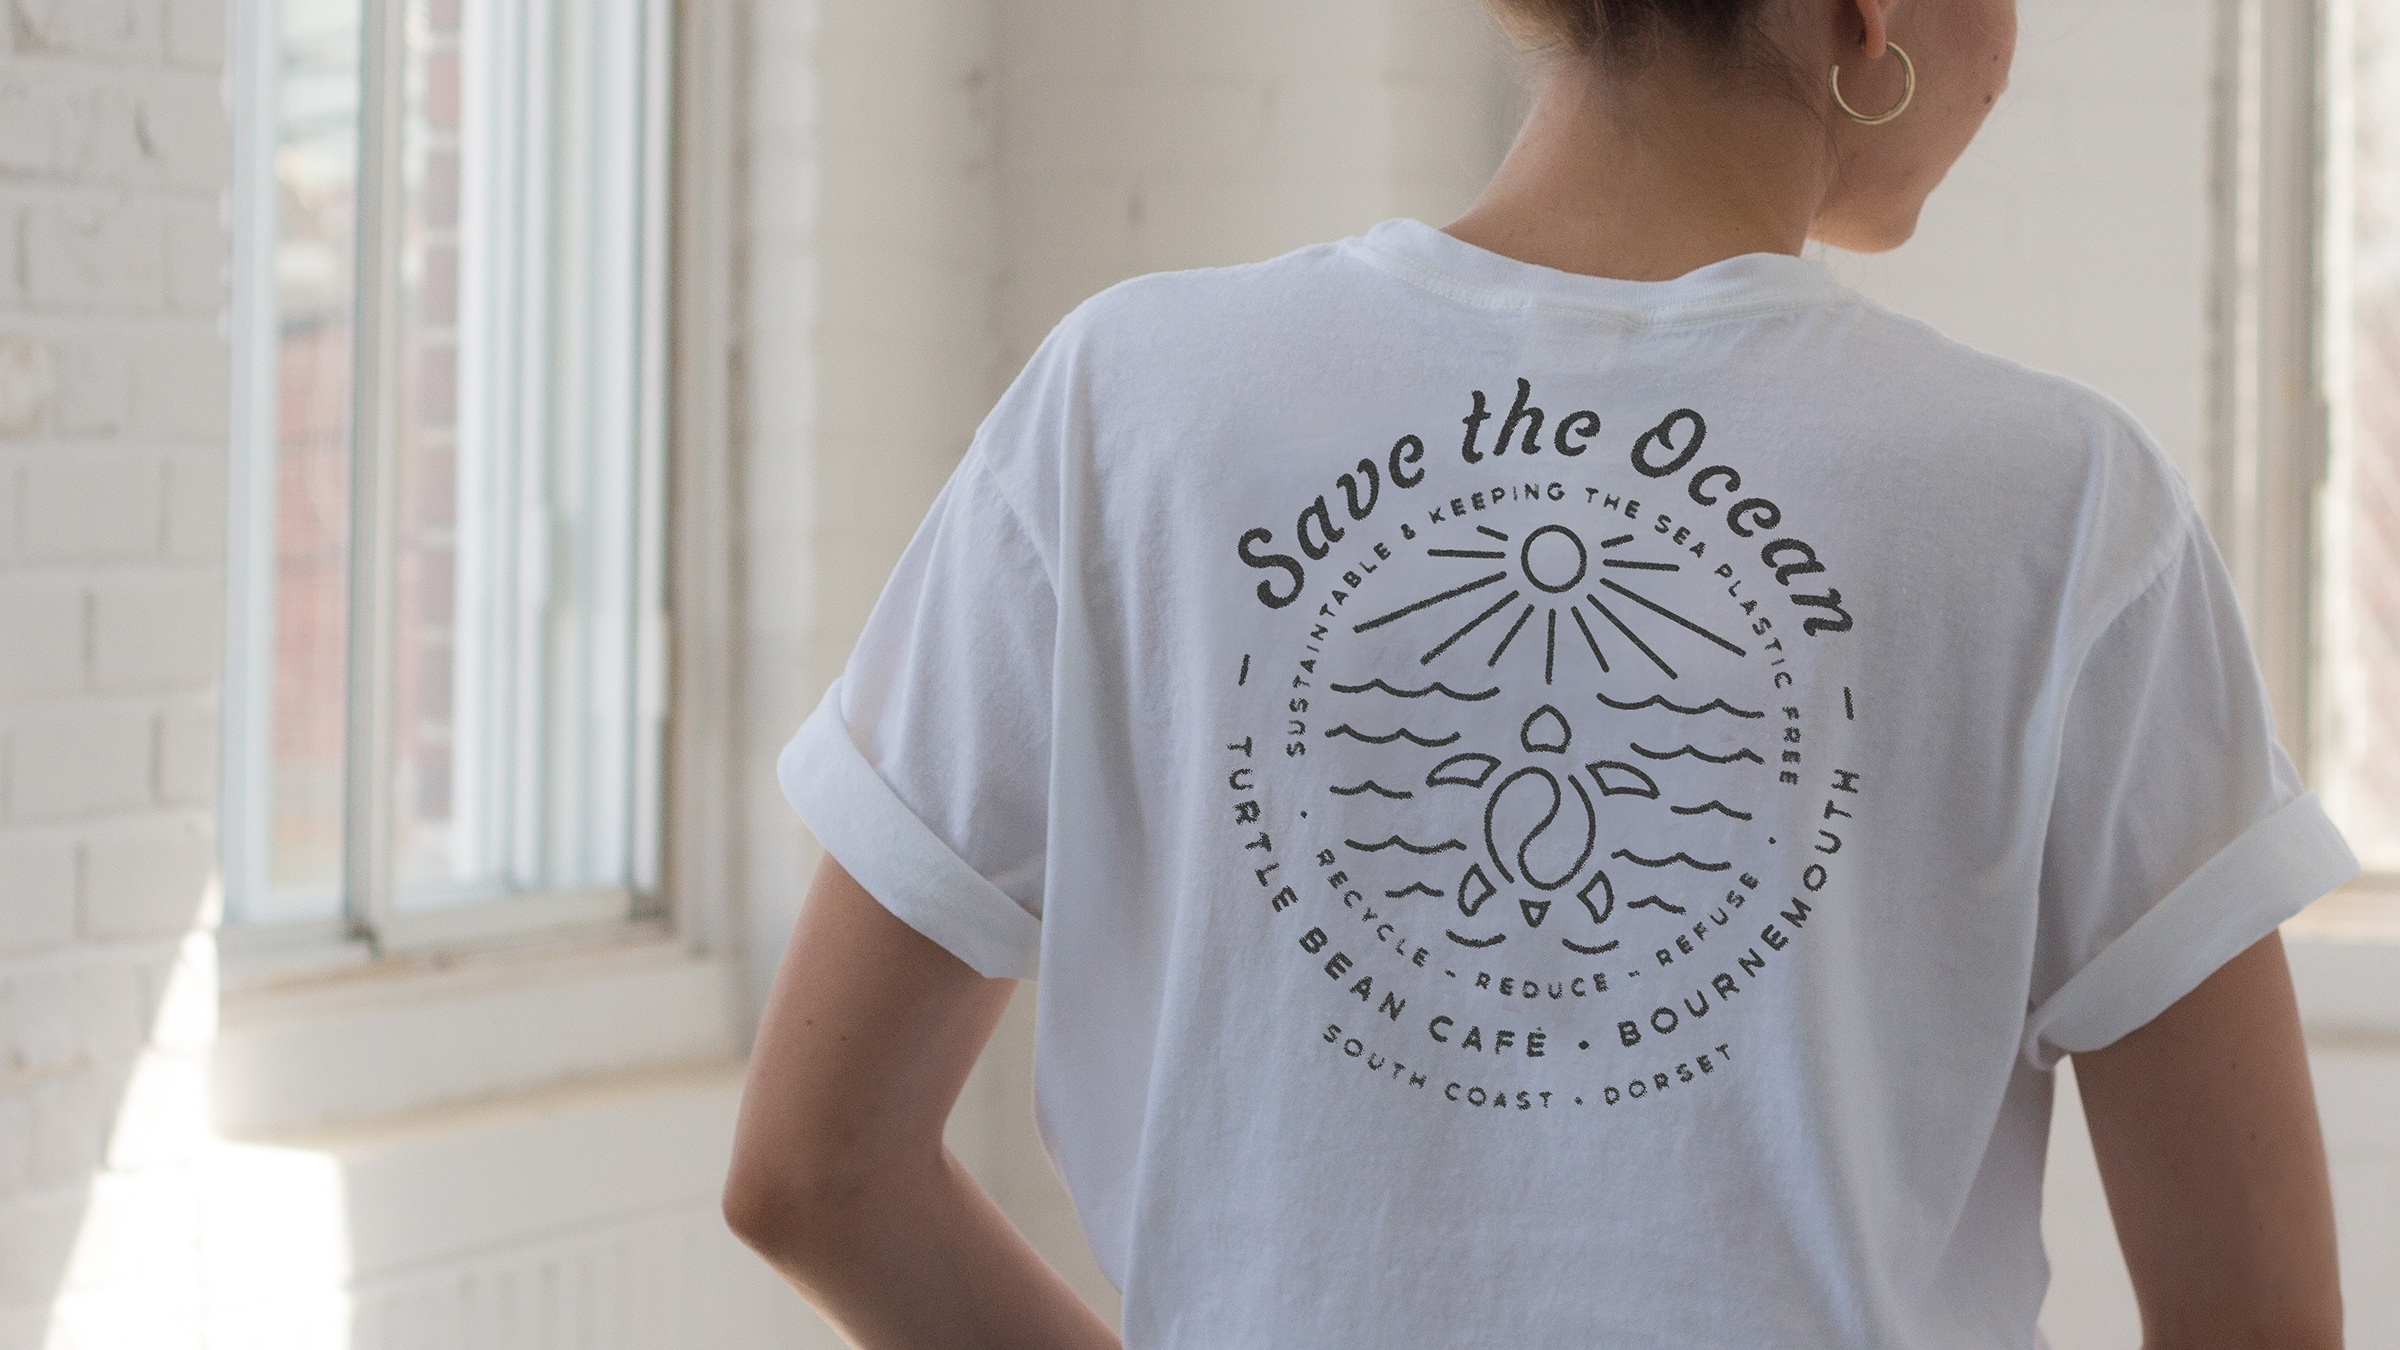 Turtle-Bean_Save-the-Ocean-shirt-BACK-copy